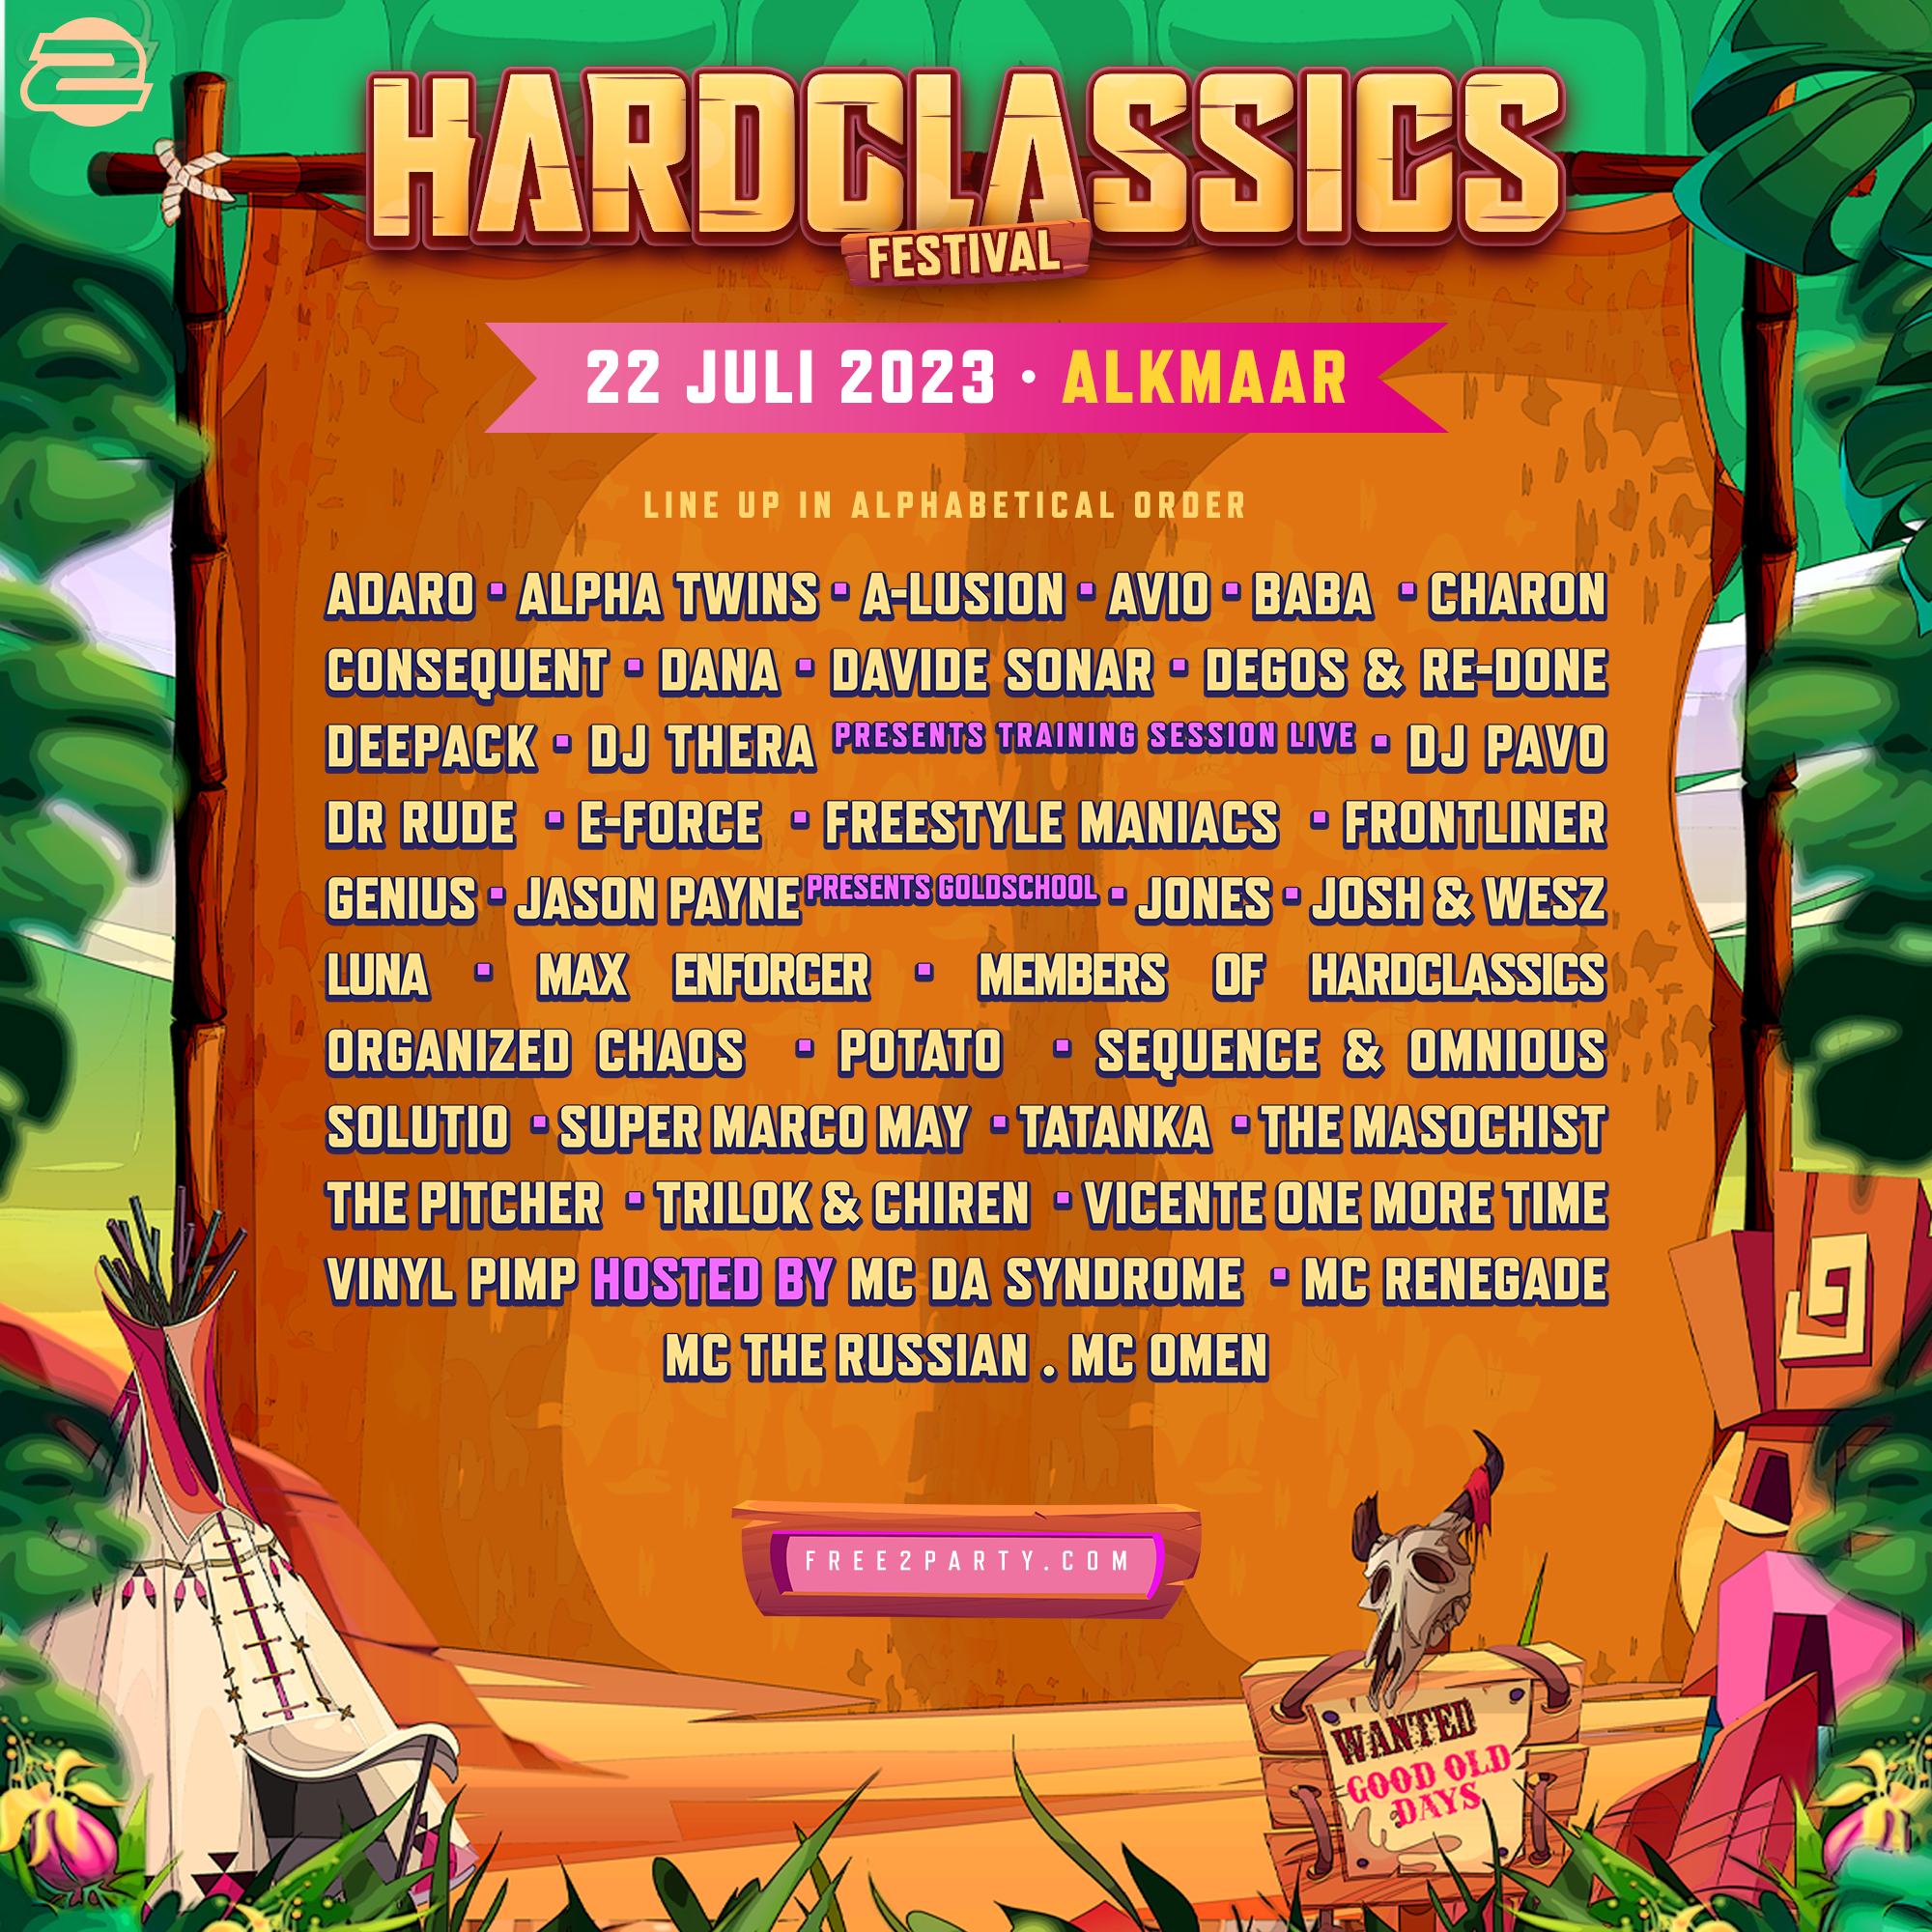 HardClassics festival 2023 complete line up